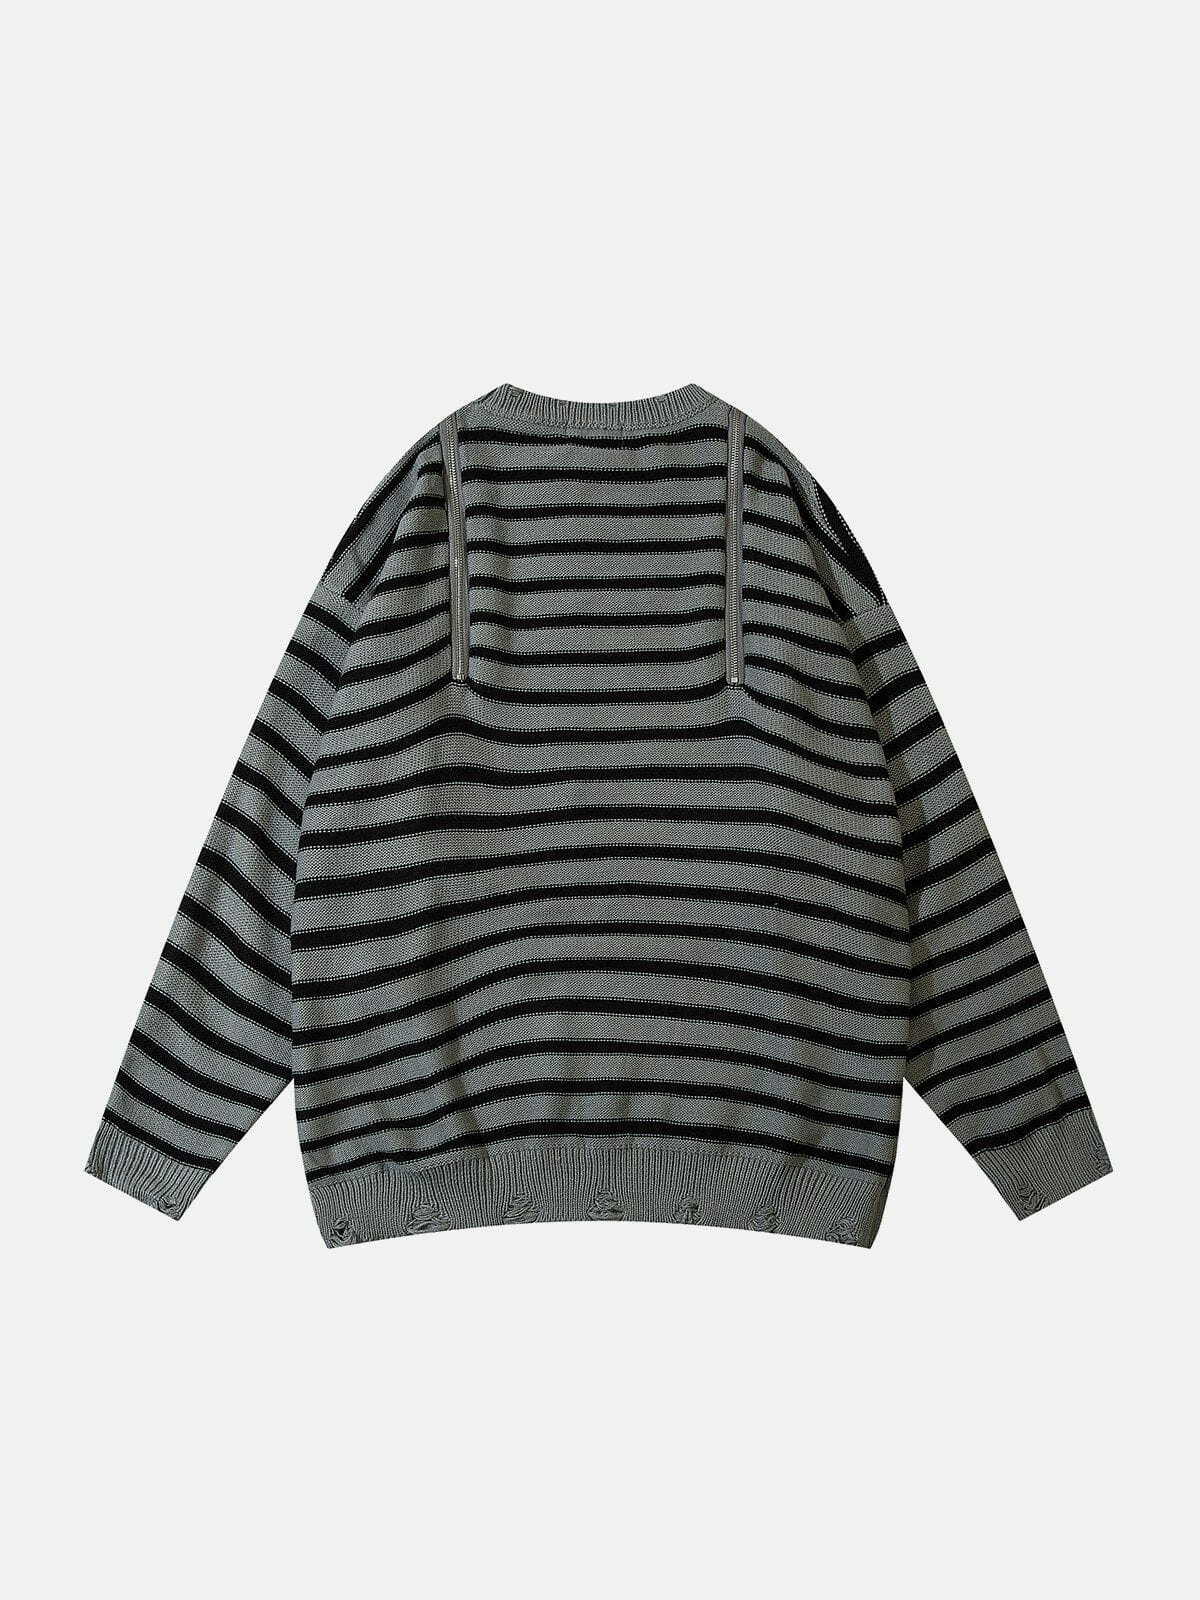 chic striped zipper sweater edgy y2k fashion 3270